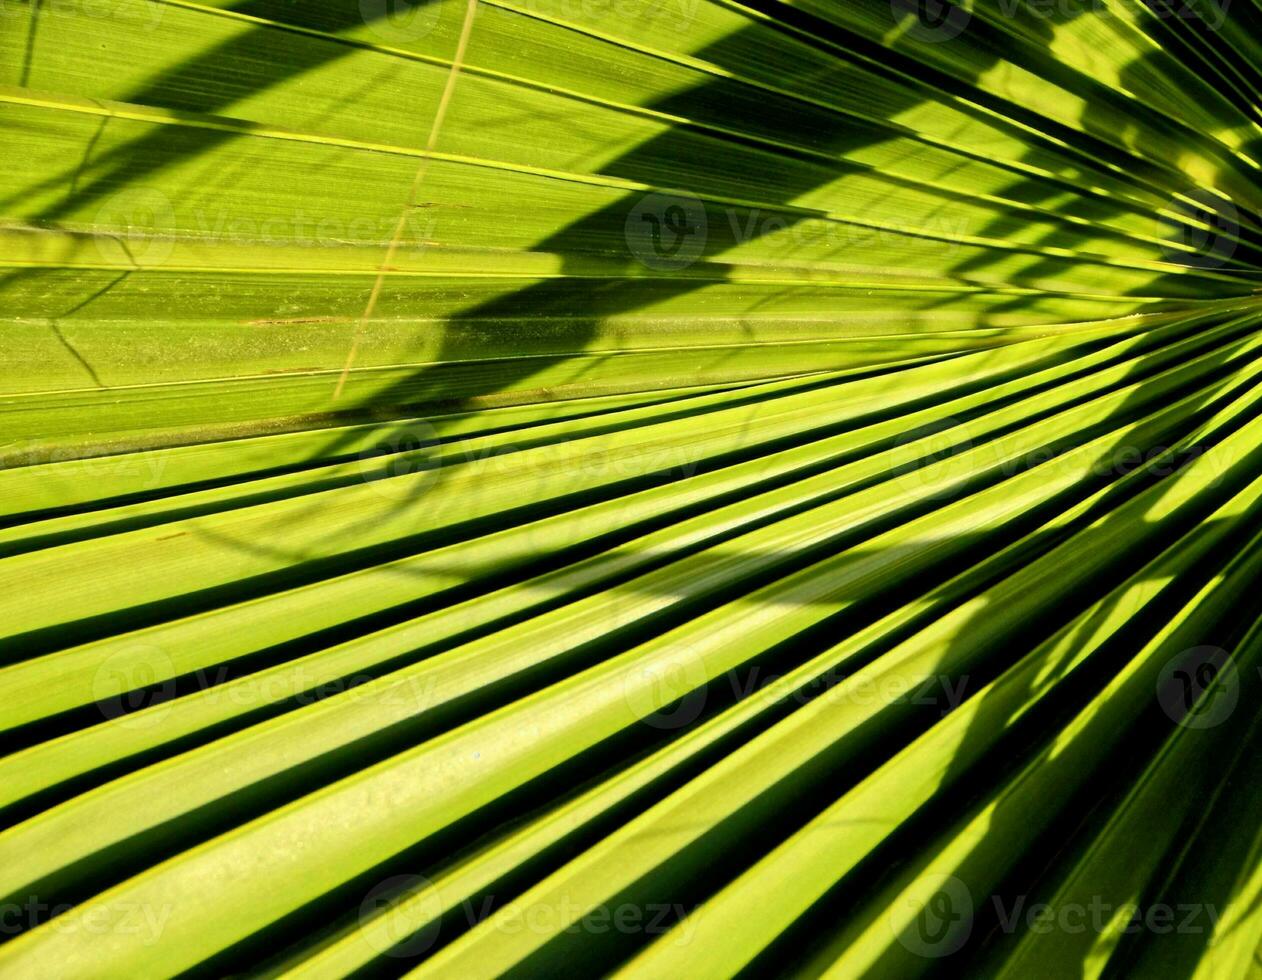 A leaf texture photo